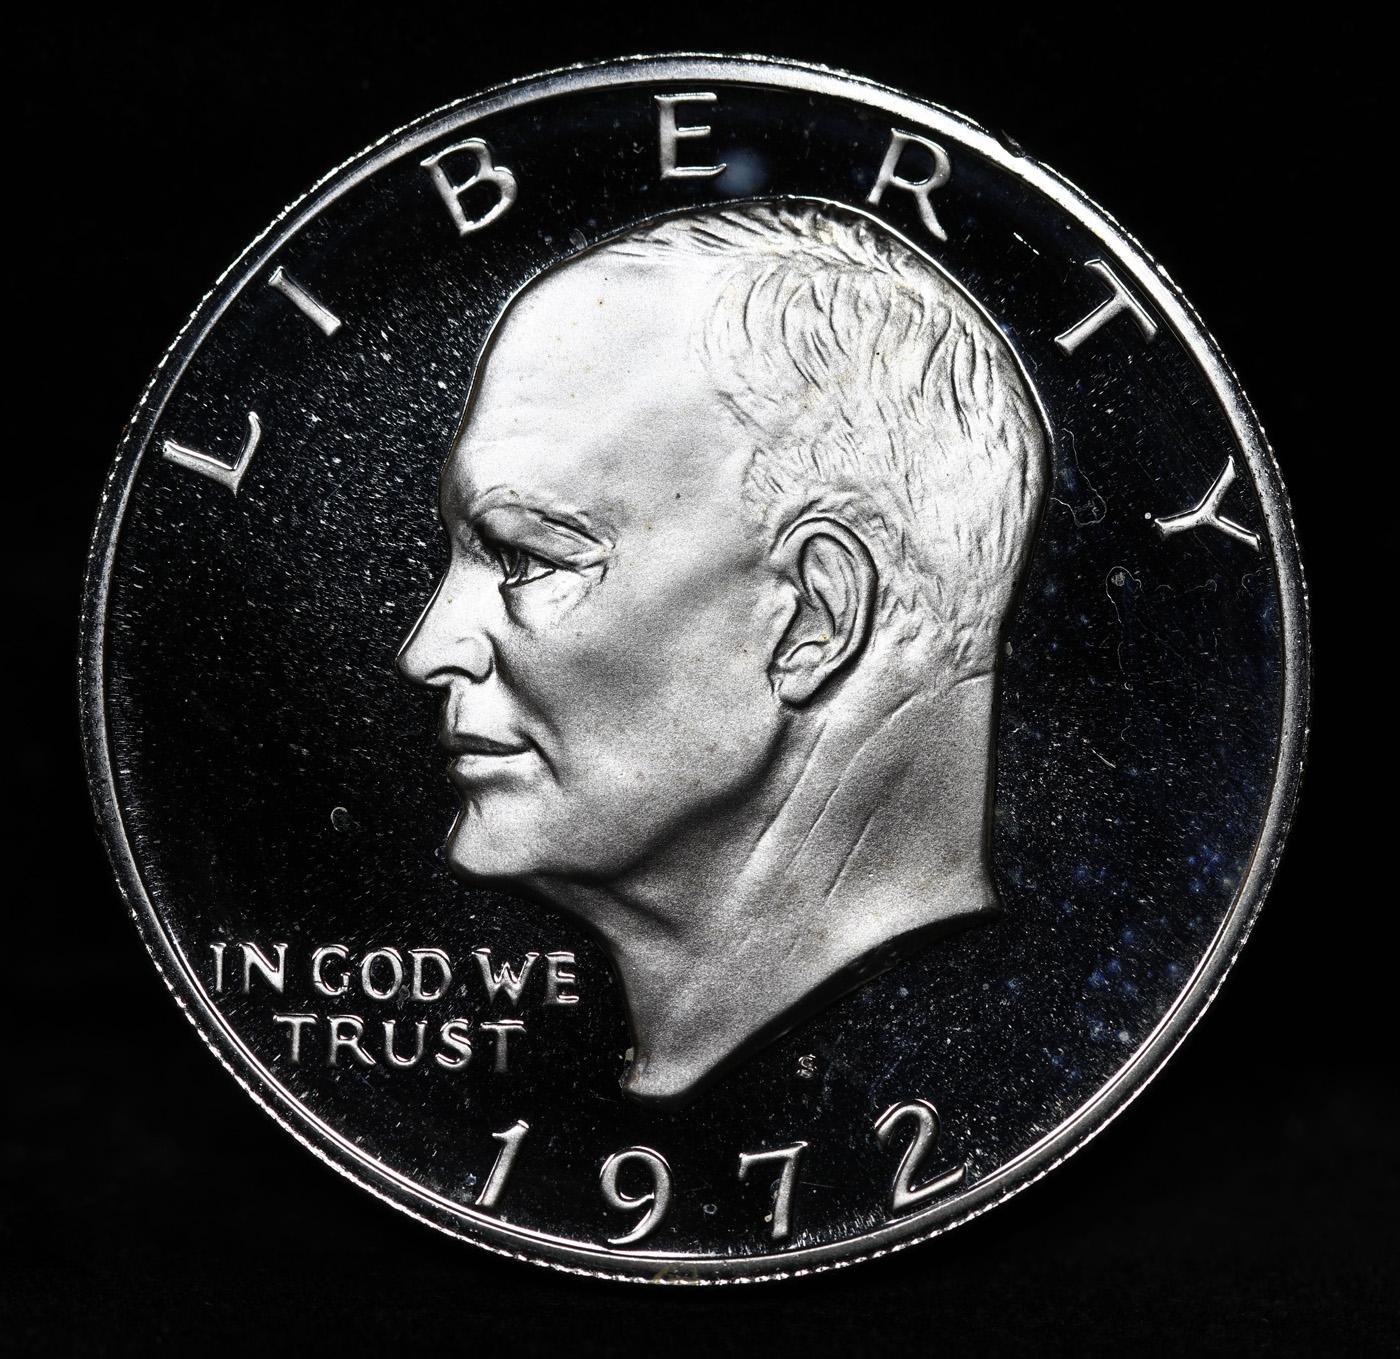 Proof 1972-s Silver Eisenhower Dollar $1 Graded pr69+ dcam By SEGS